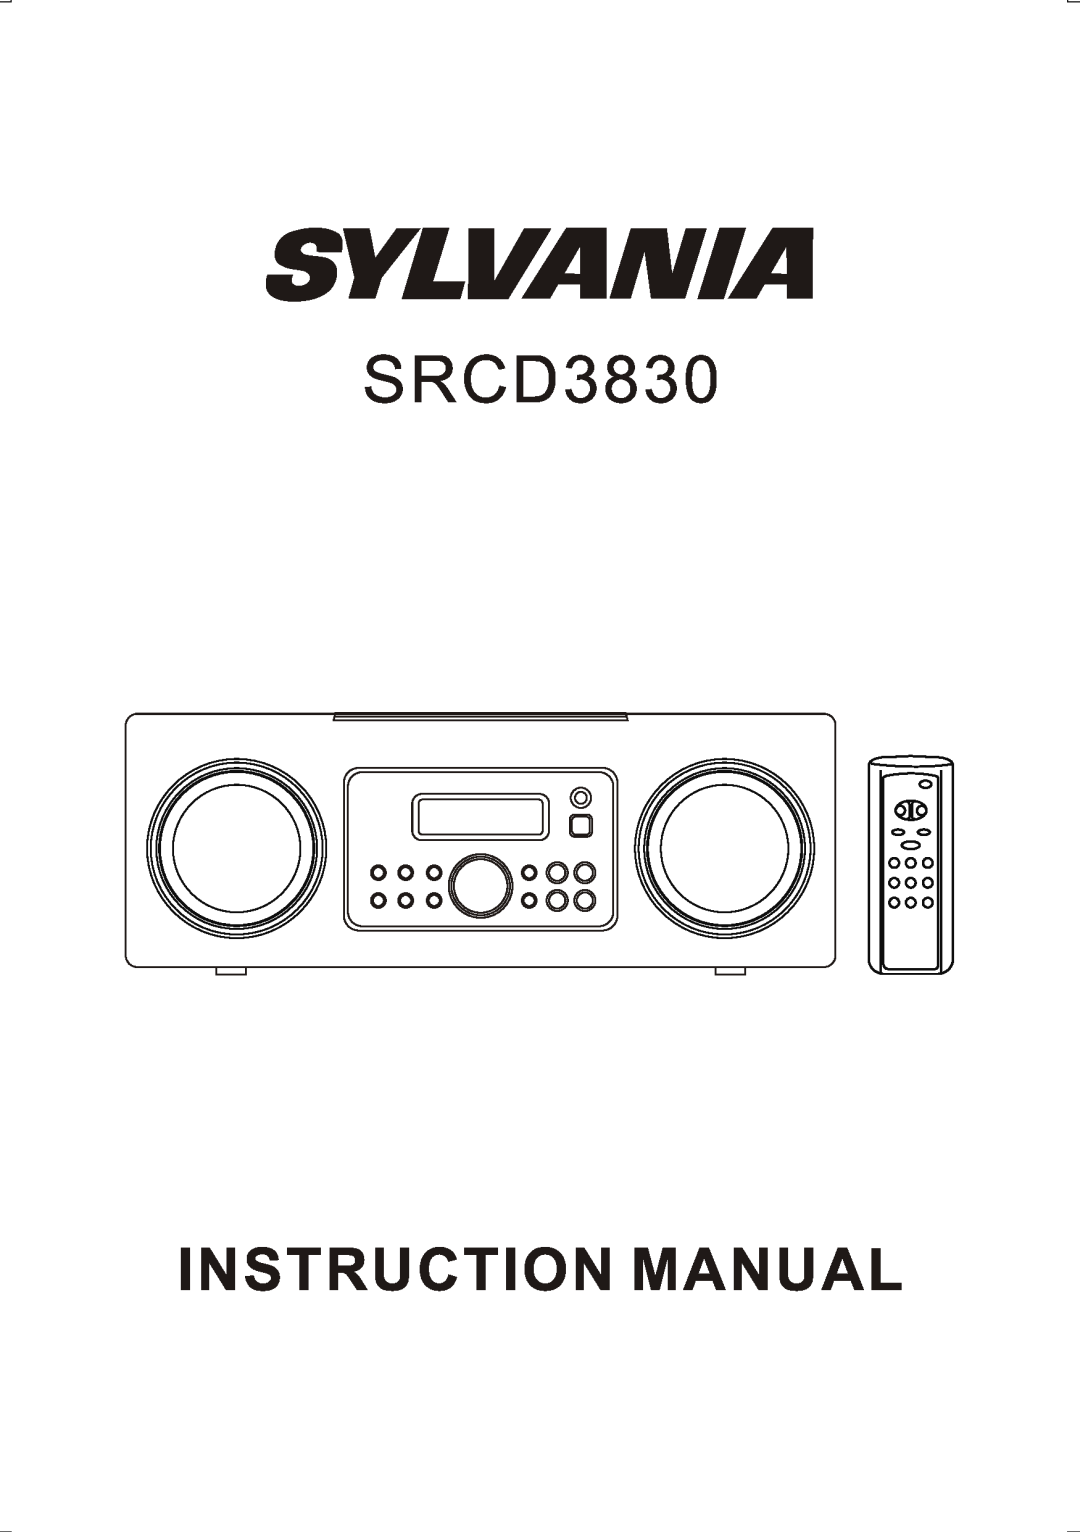 Sylvania SRCD3830 instruction manual 